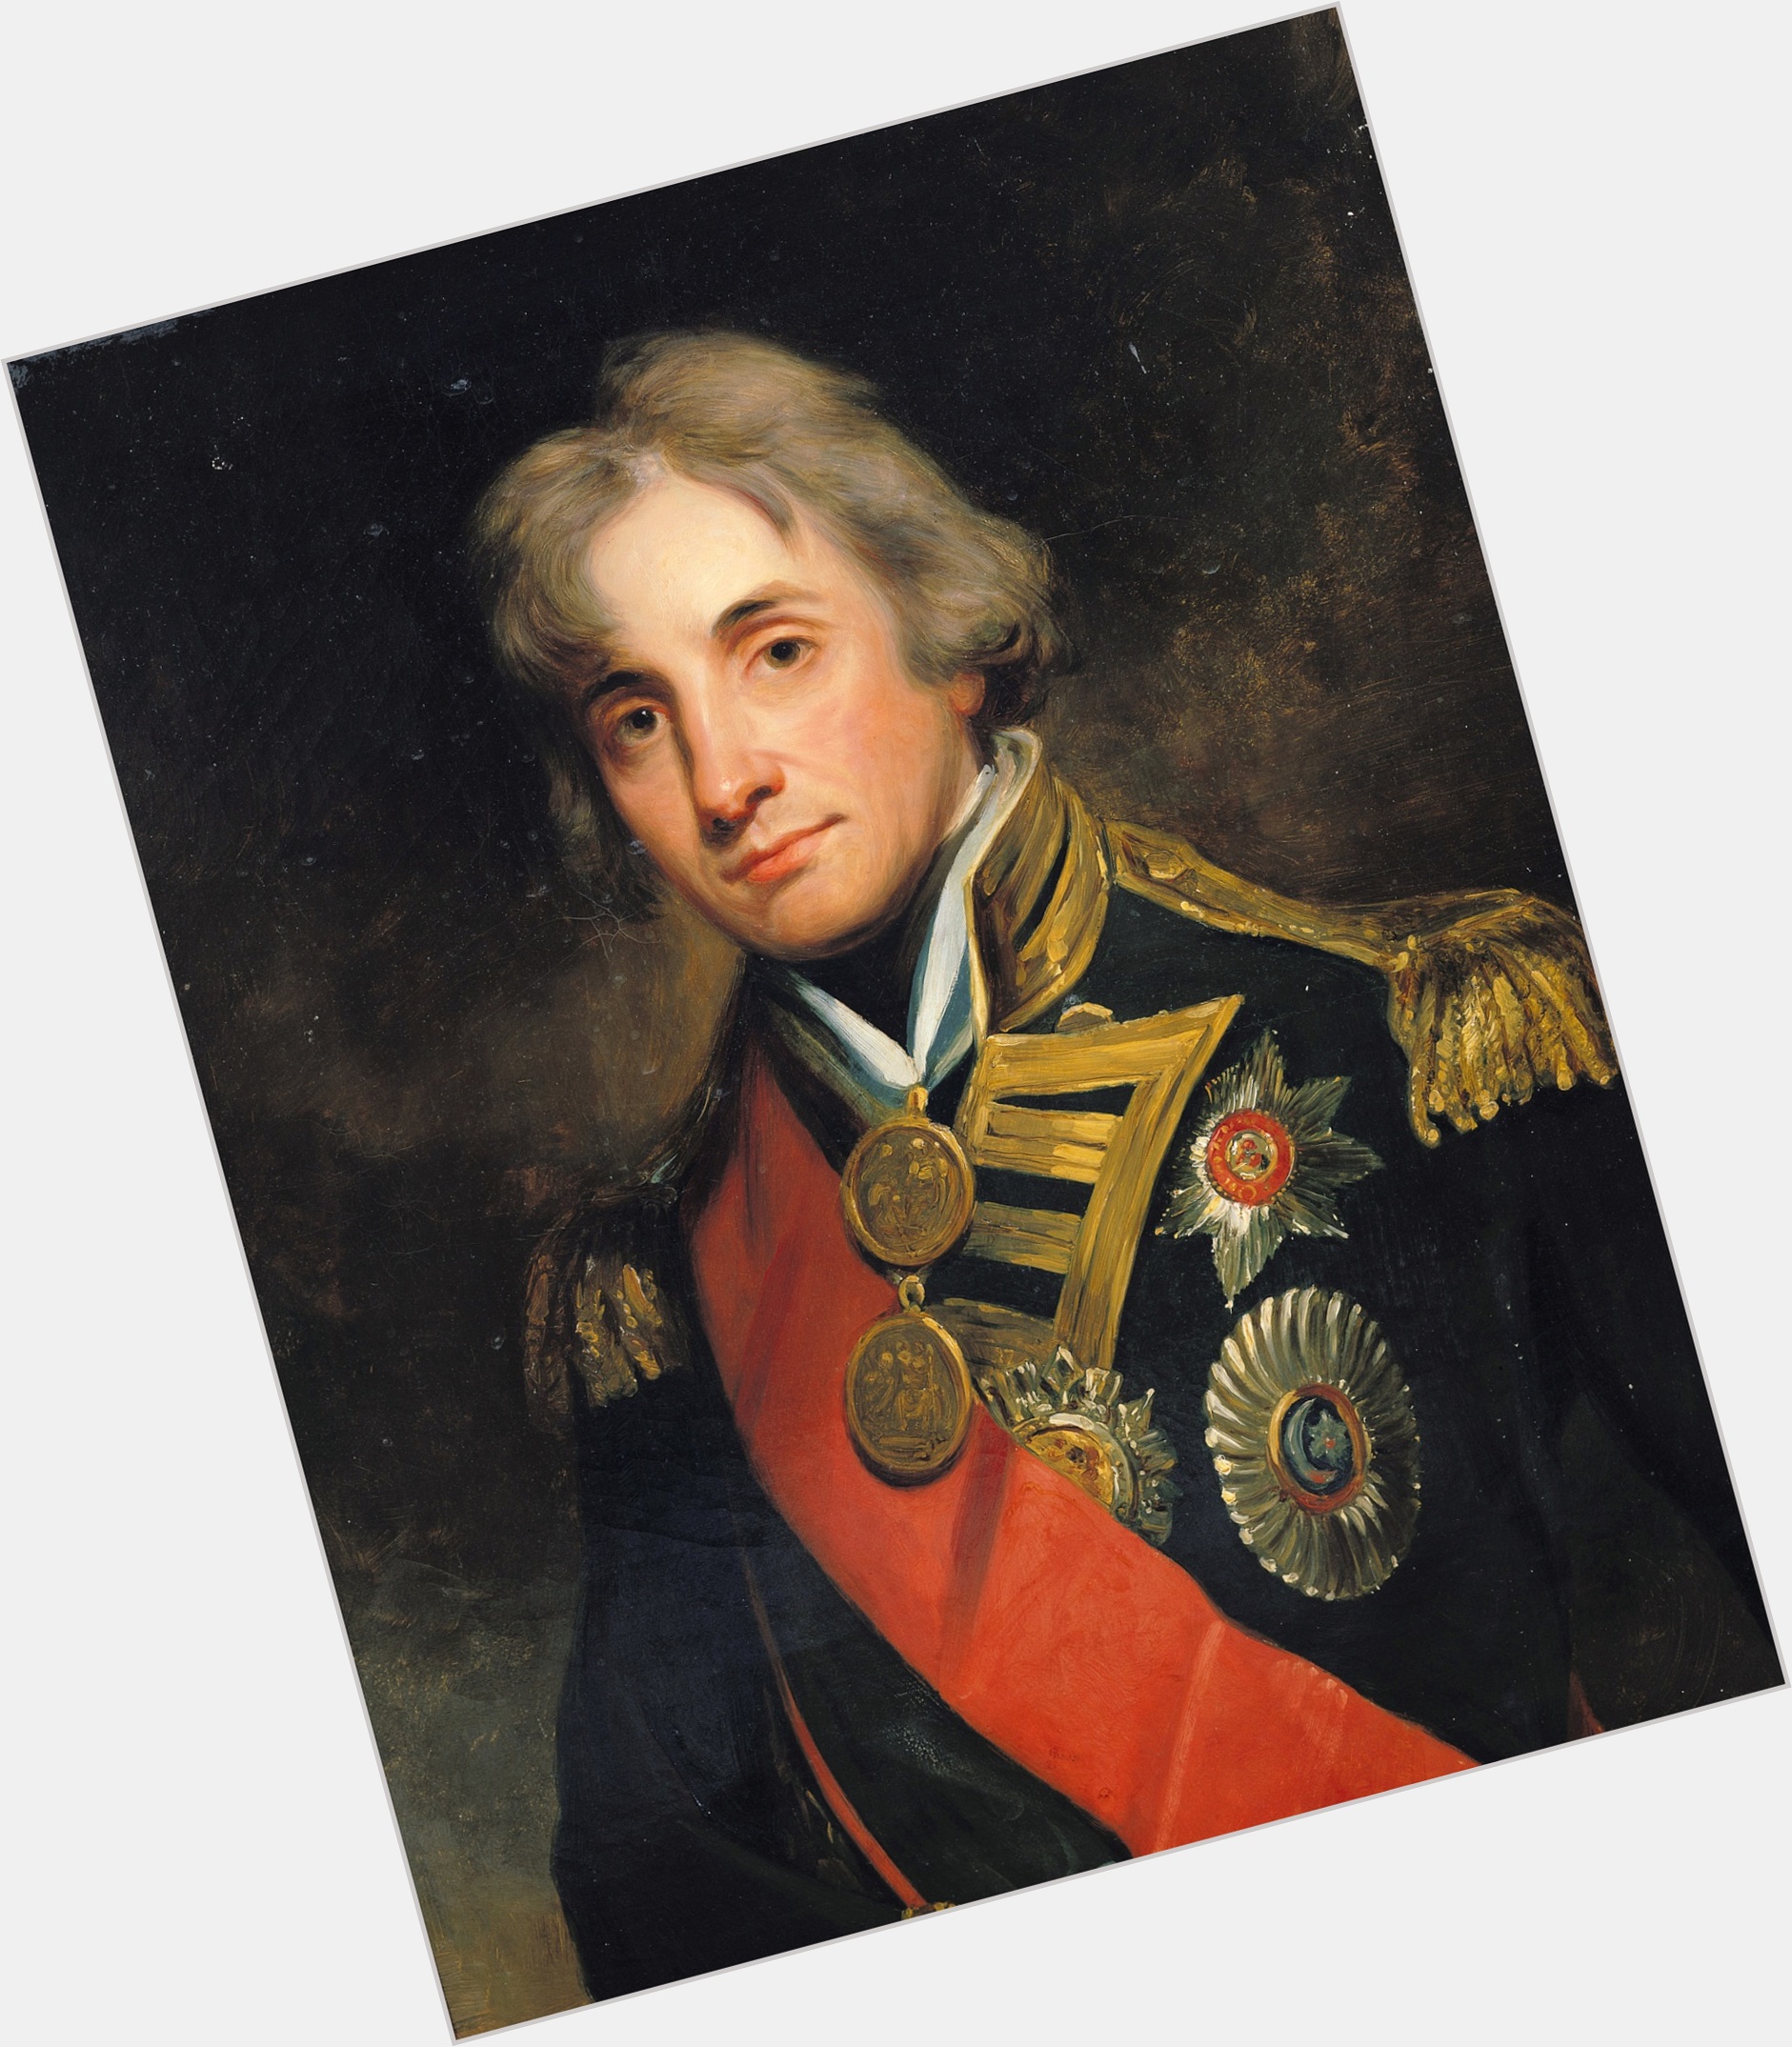 Horatio Nelson, 1st Viscount Nelson Slim body,  salt and pepper hair & hairstyles